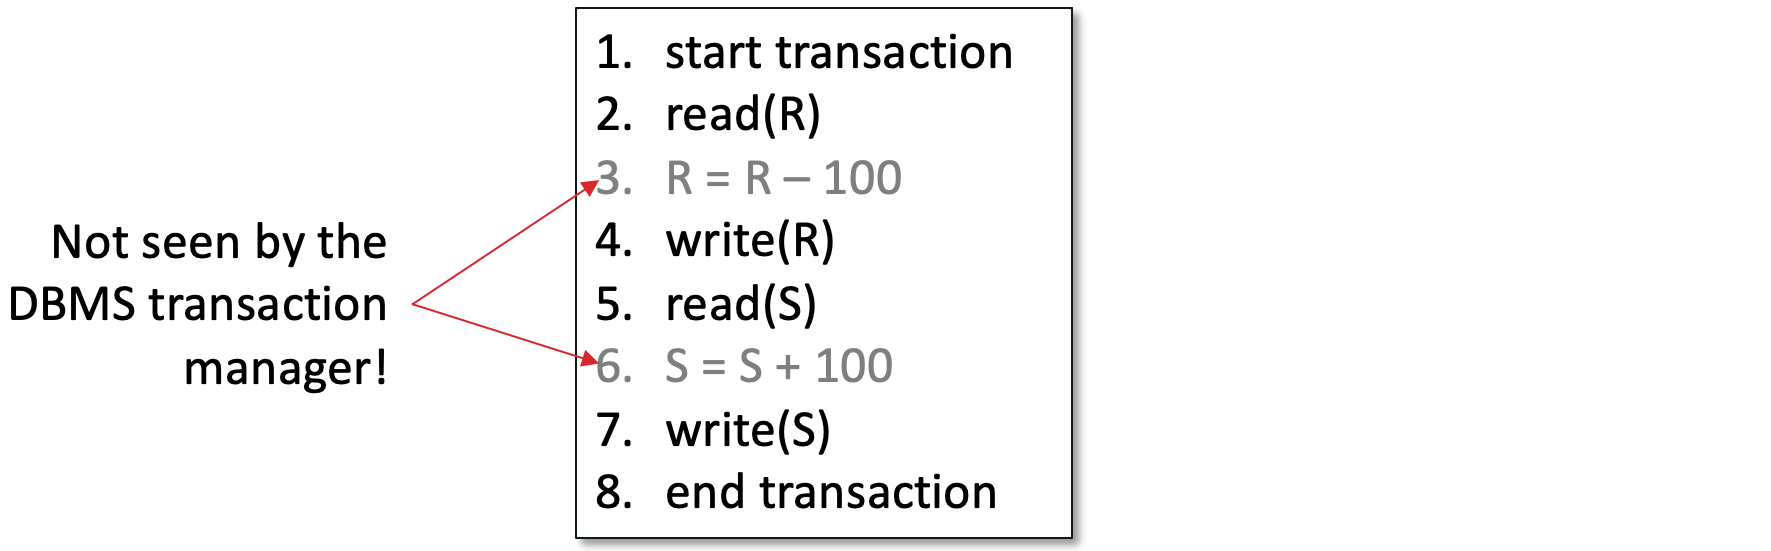 transaction_example